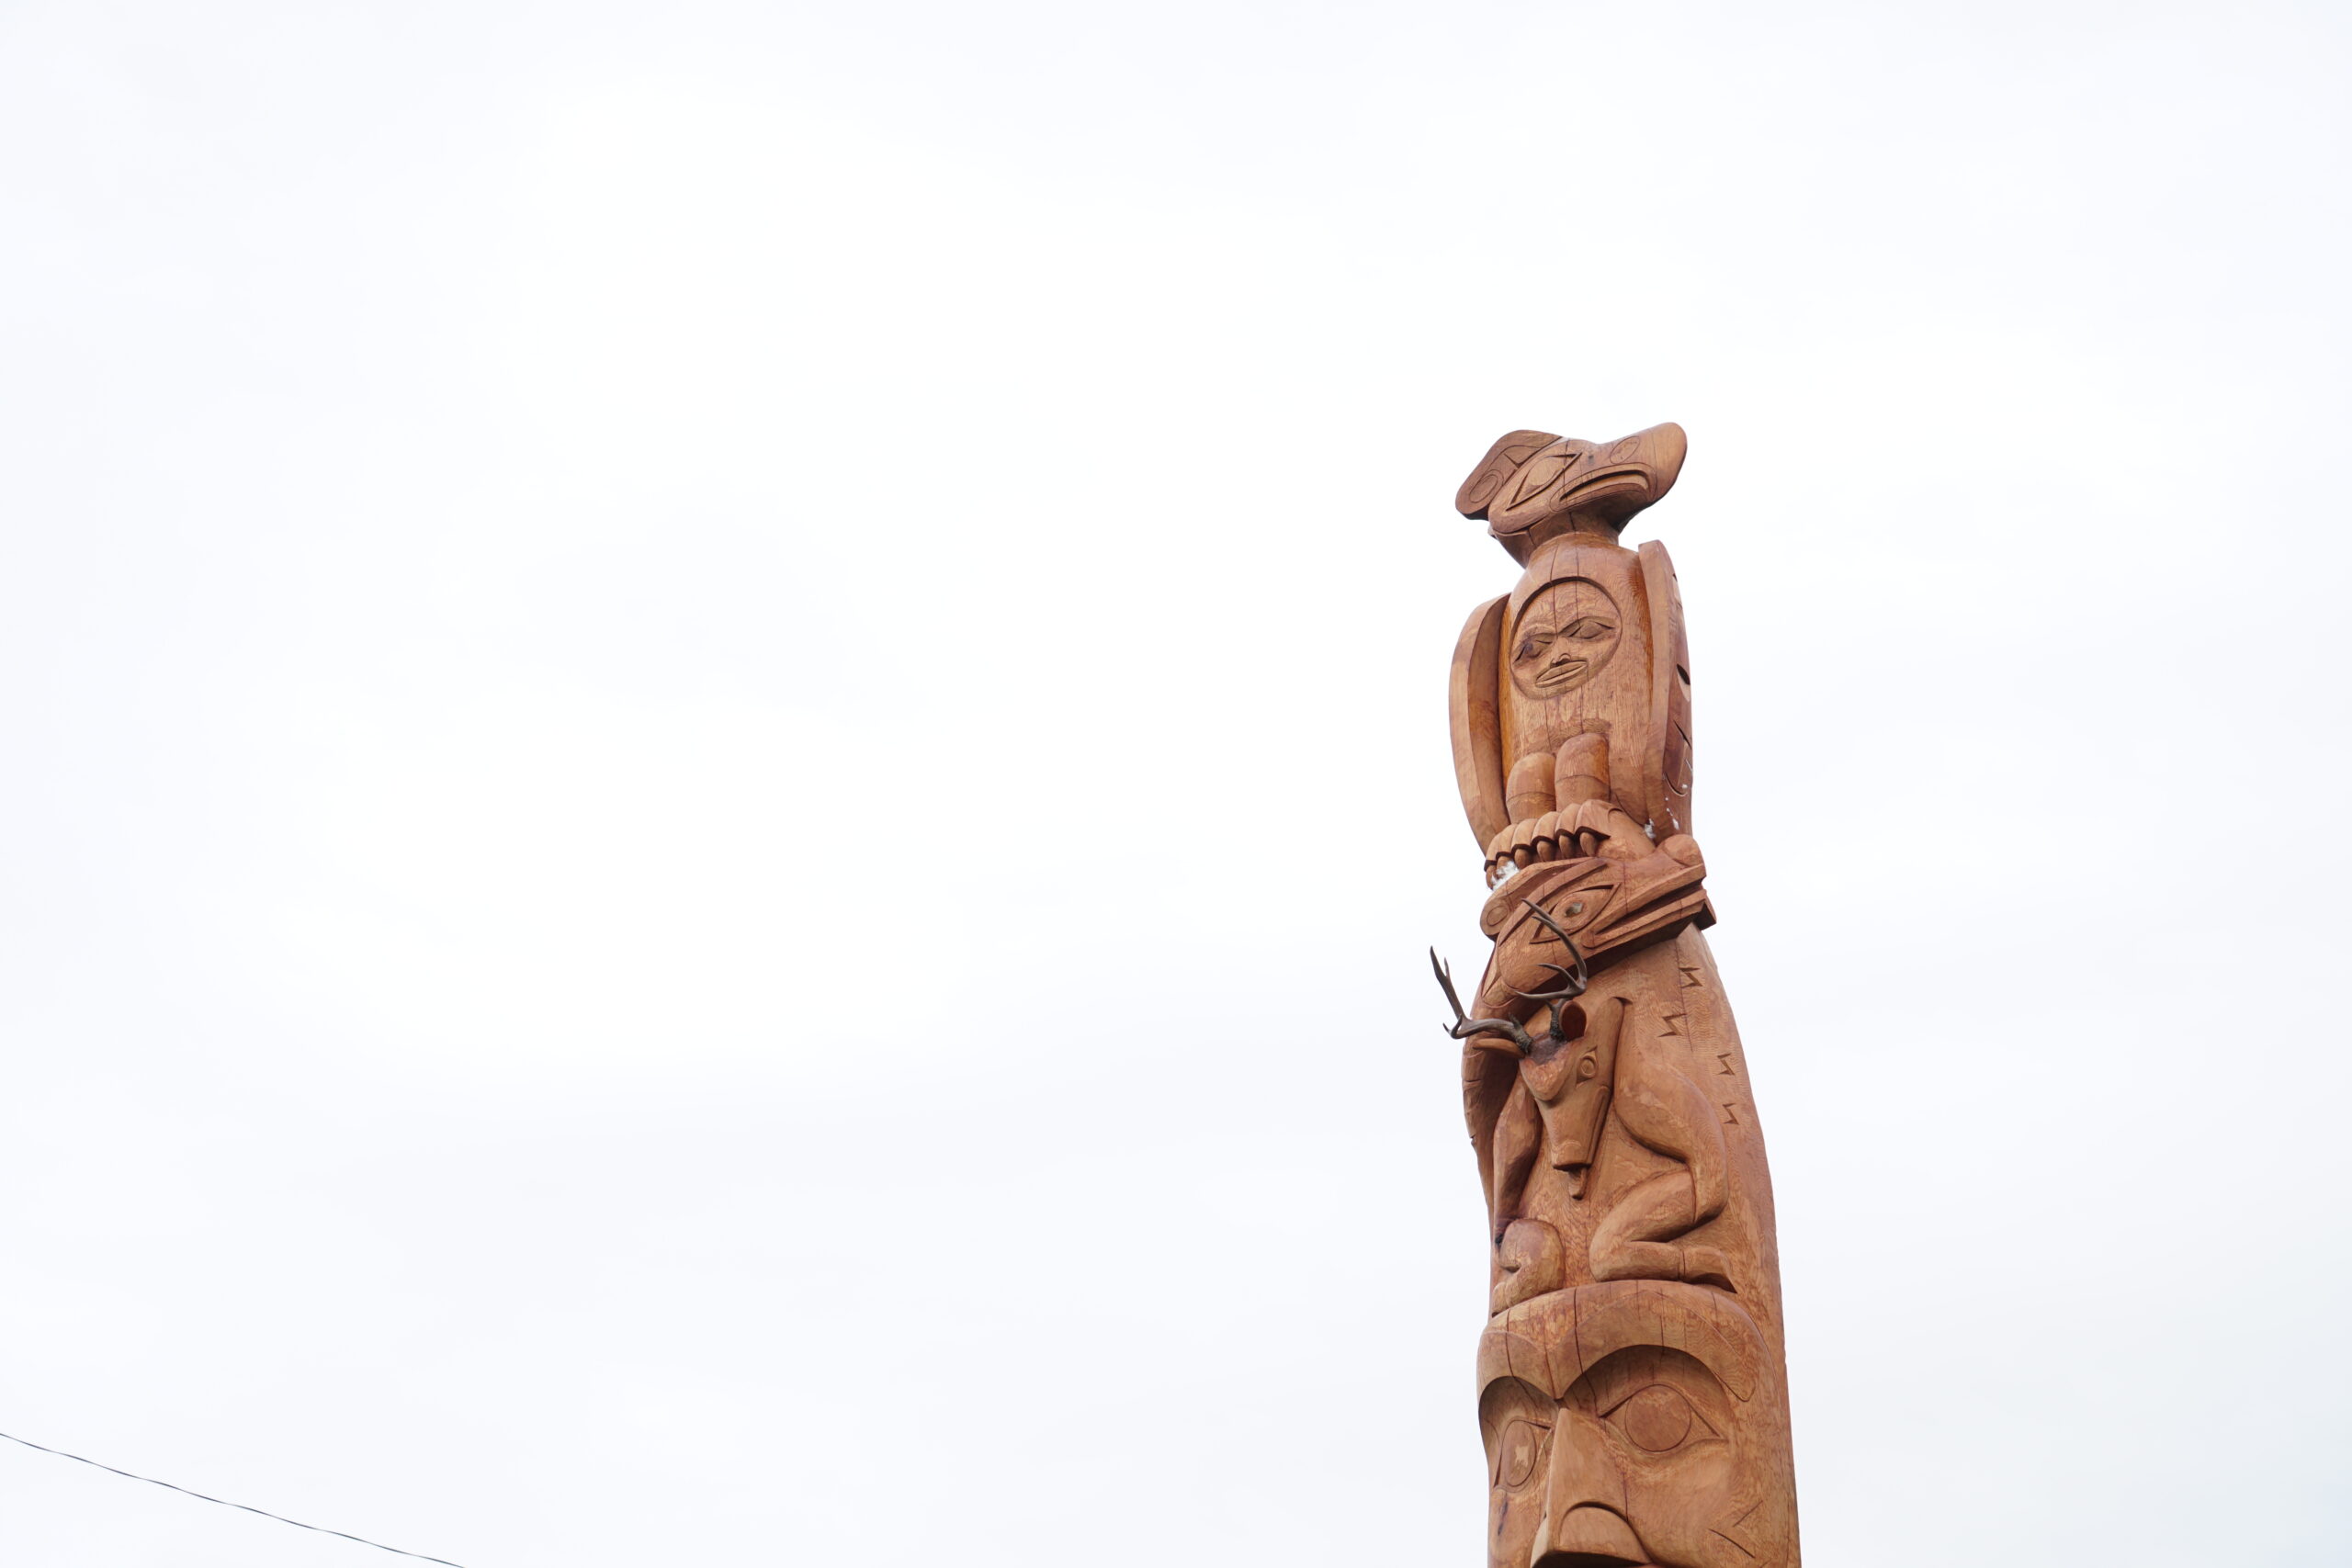 The community of Opitsaht gathered to celebrate the totem pole raising on July 1, 2022. 